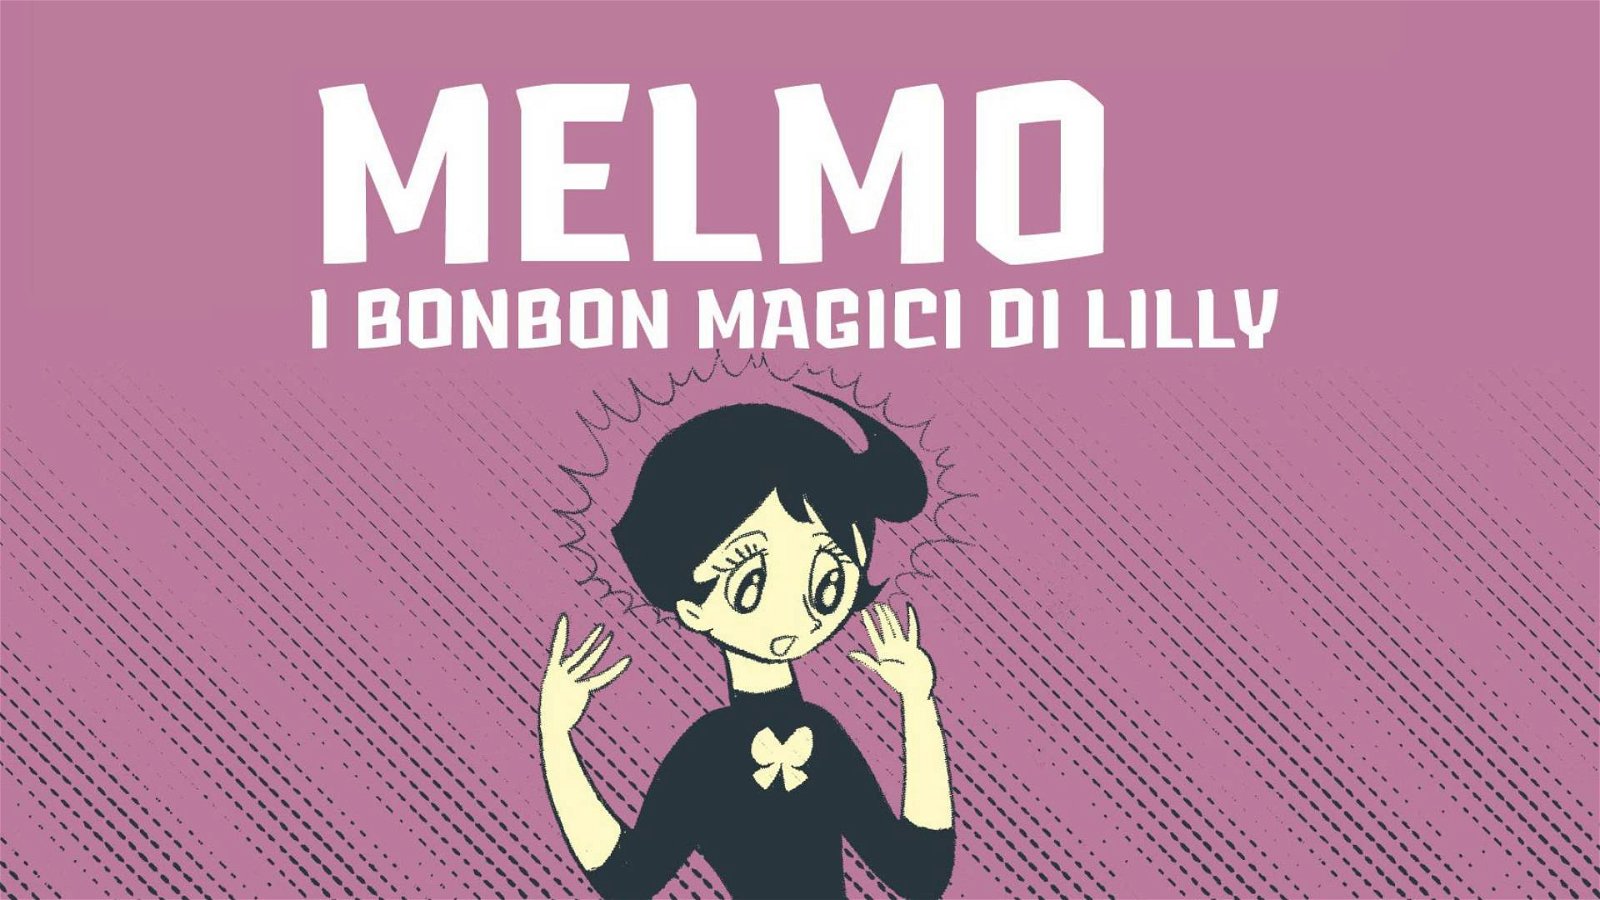 Immagine di Melmo, I bonbon magici di Lilly: recensione del manga di Osamu Tezuka